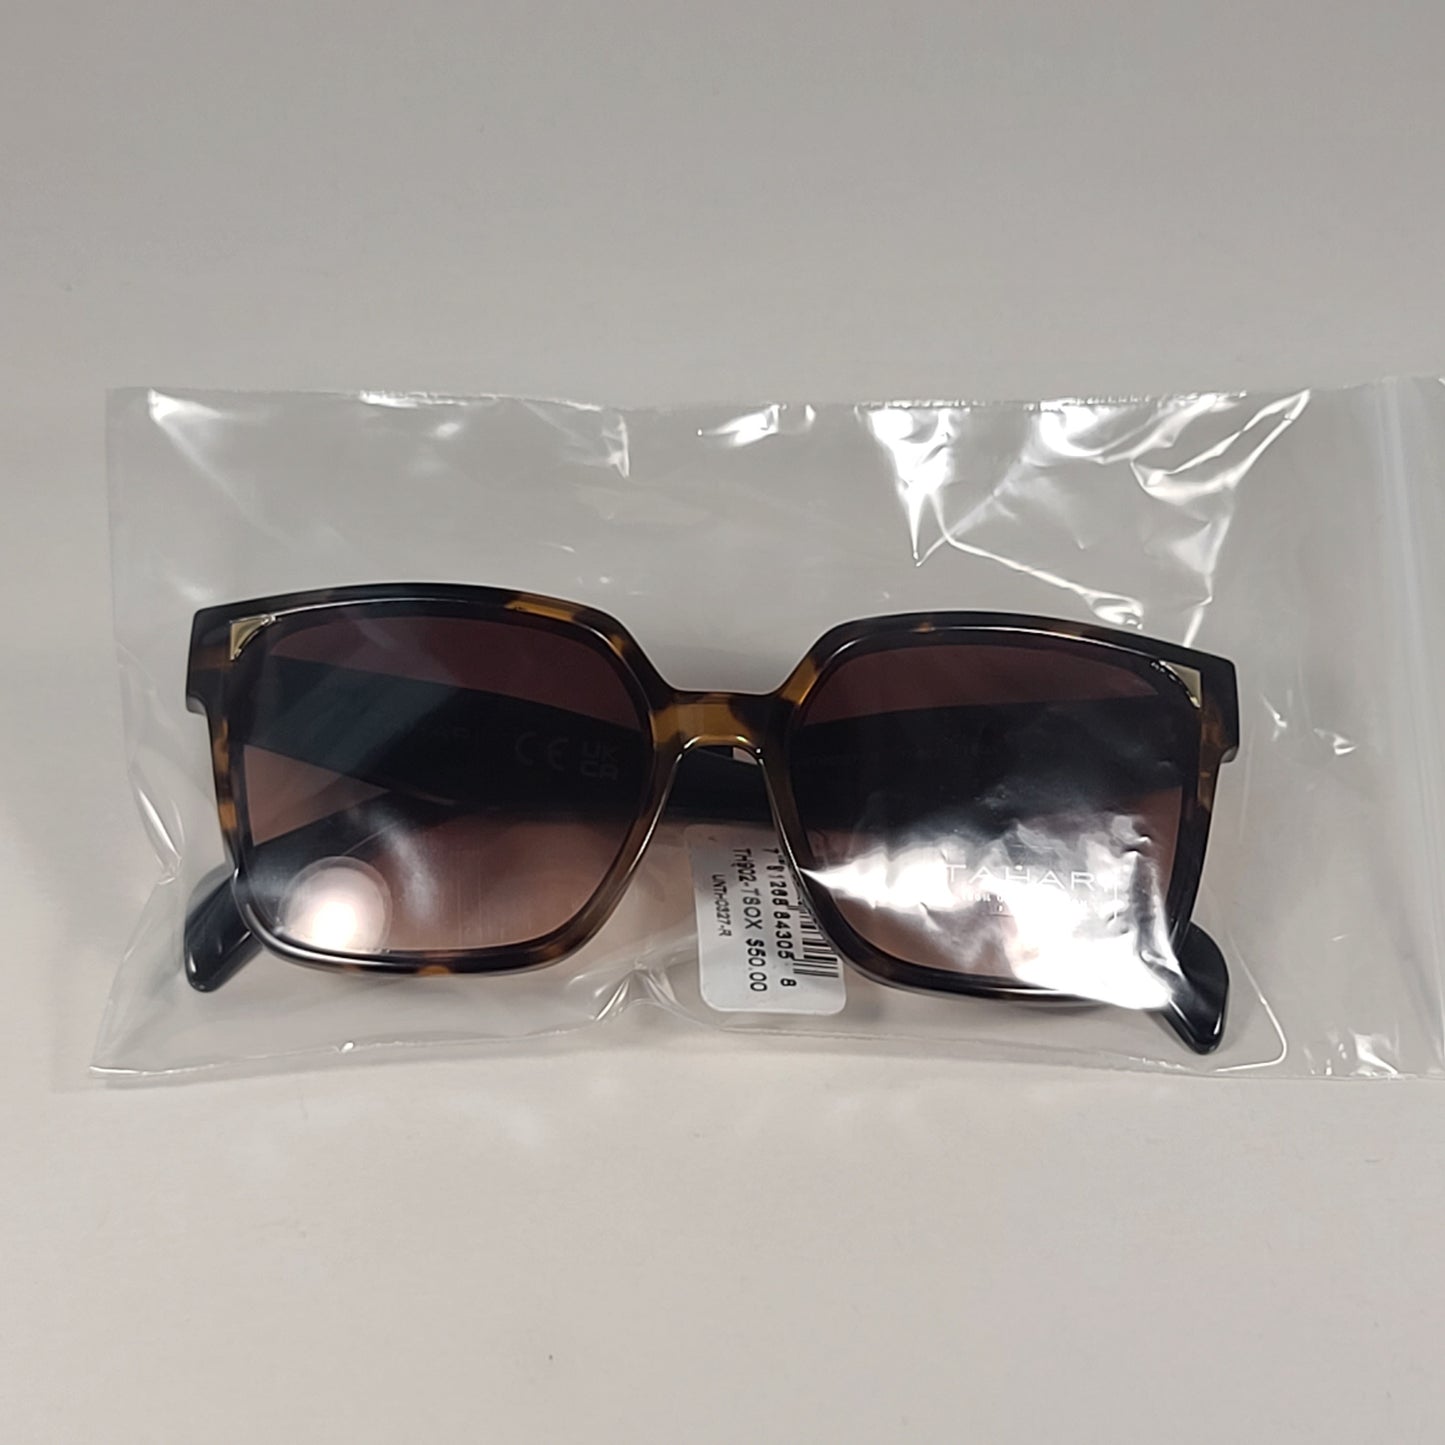 Tahari Designer Sunglasses Tortoise Brown Black & Brown Gradient TH902 TSOX - Sunglasses